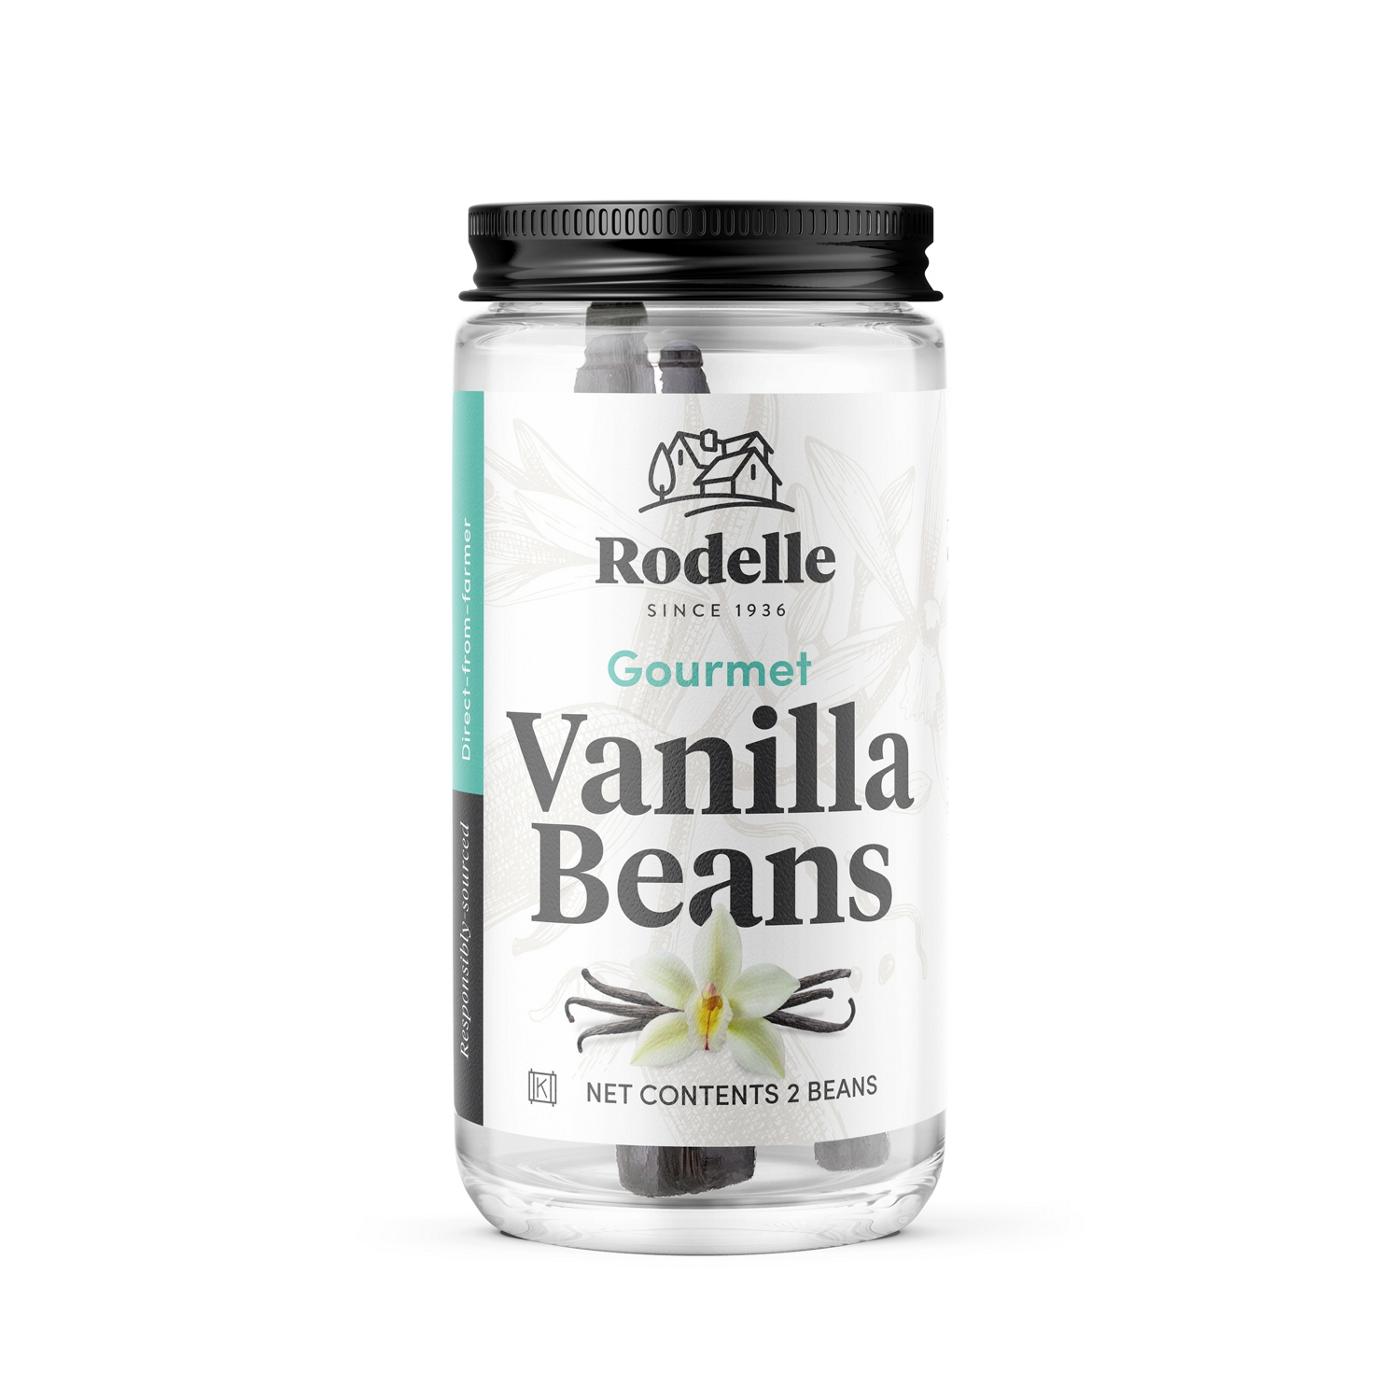 Rodelle Gourmet Vanilla Beans; image 1 of 5